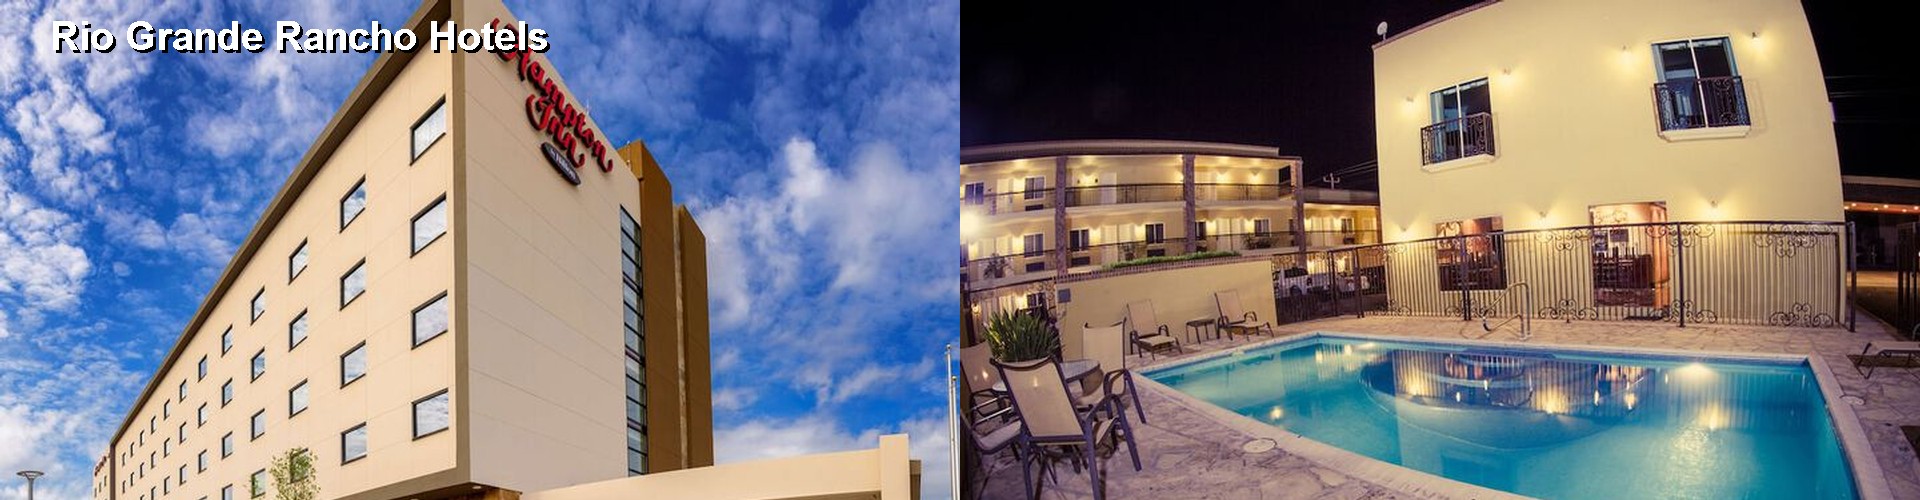 5 Best Hotels near Rio Grande Rancho